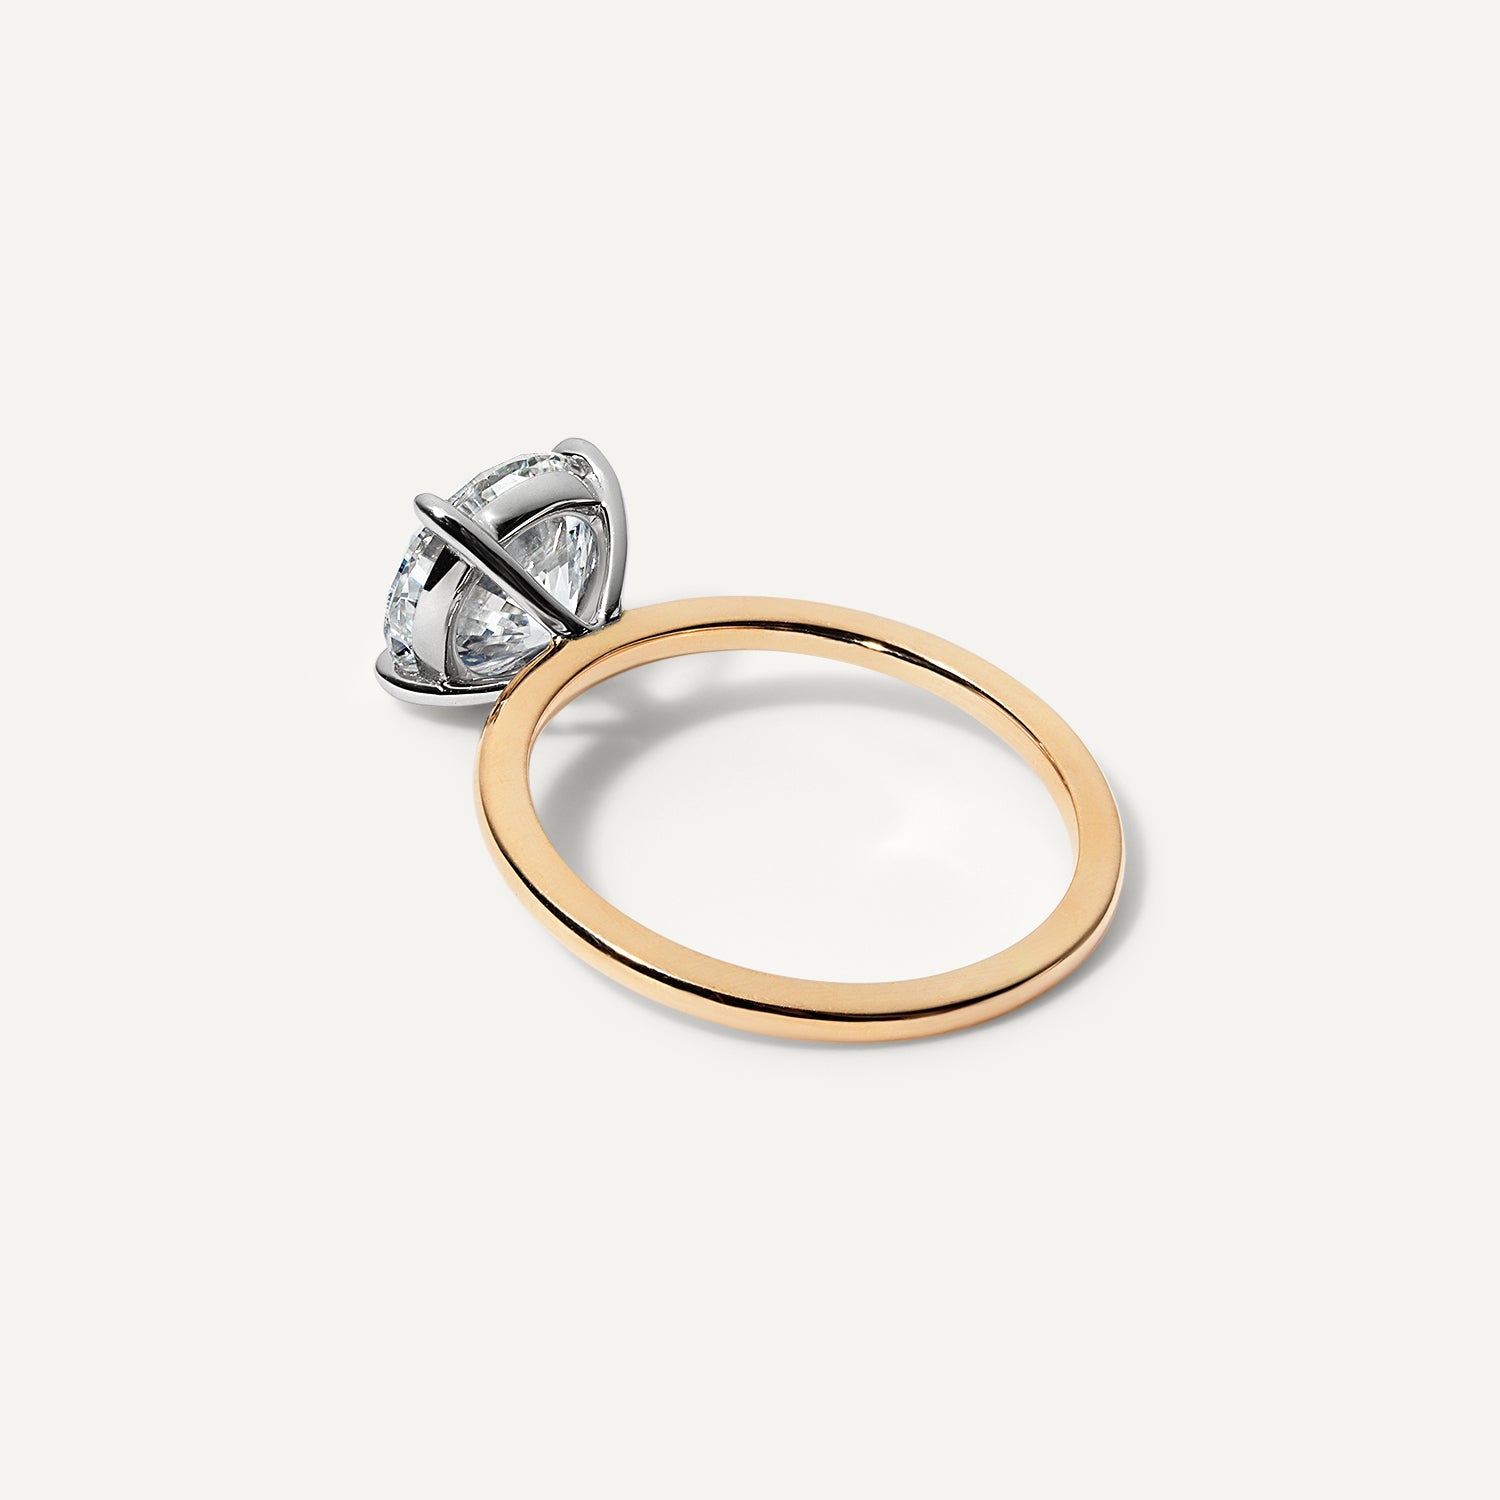 Round lab diamond engagement ring.